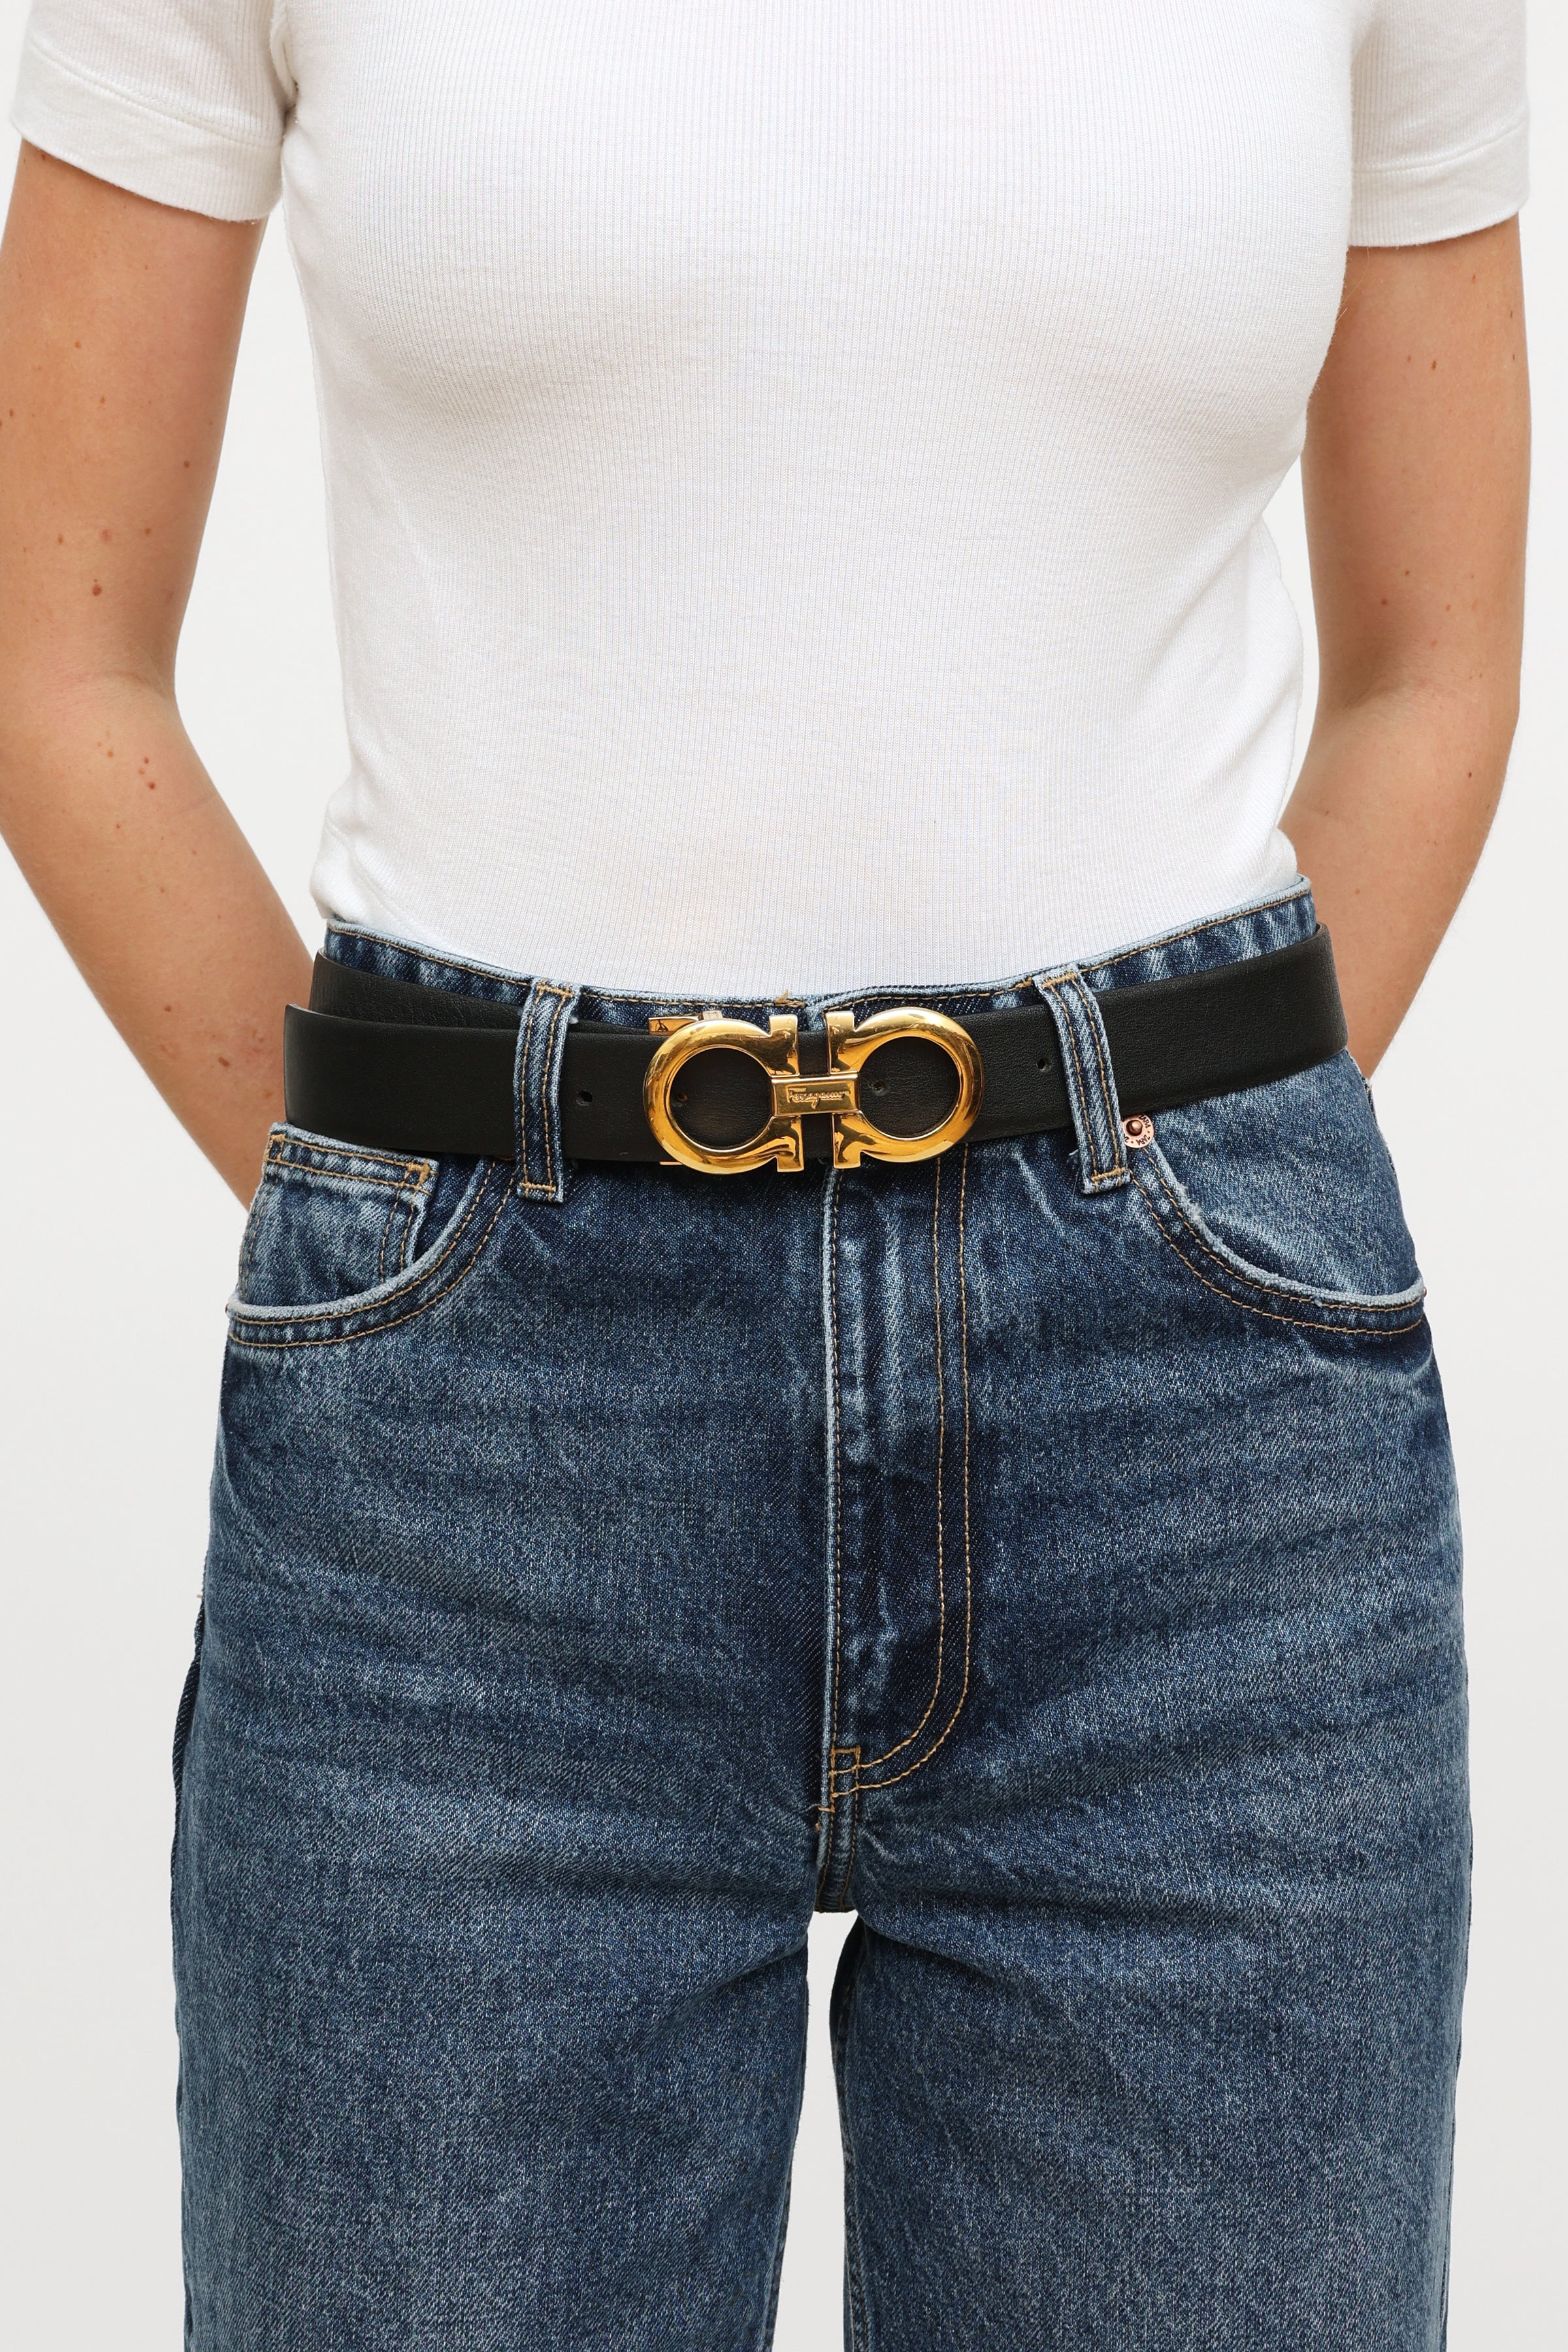 Salvatore Ferragamo belt - clothing & accessories - by owner